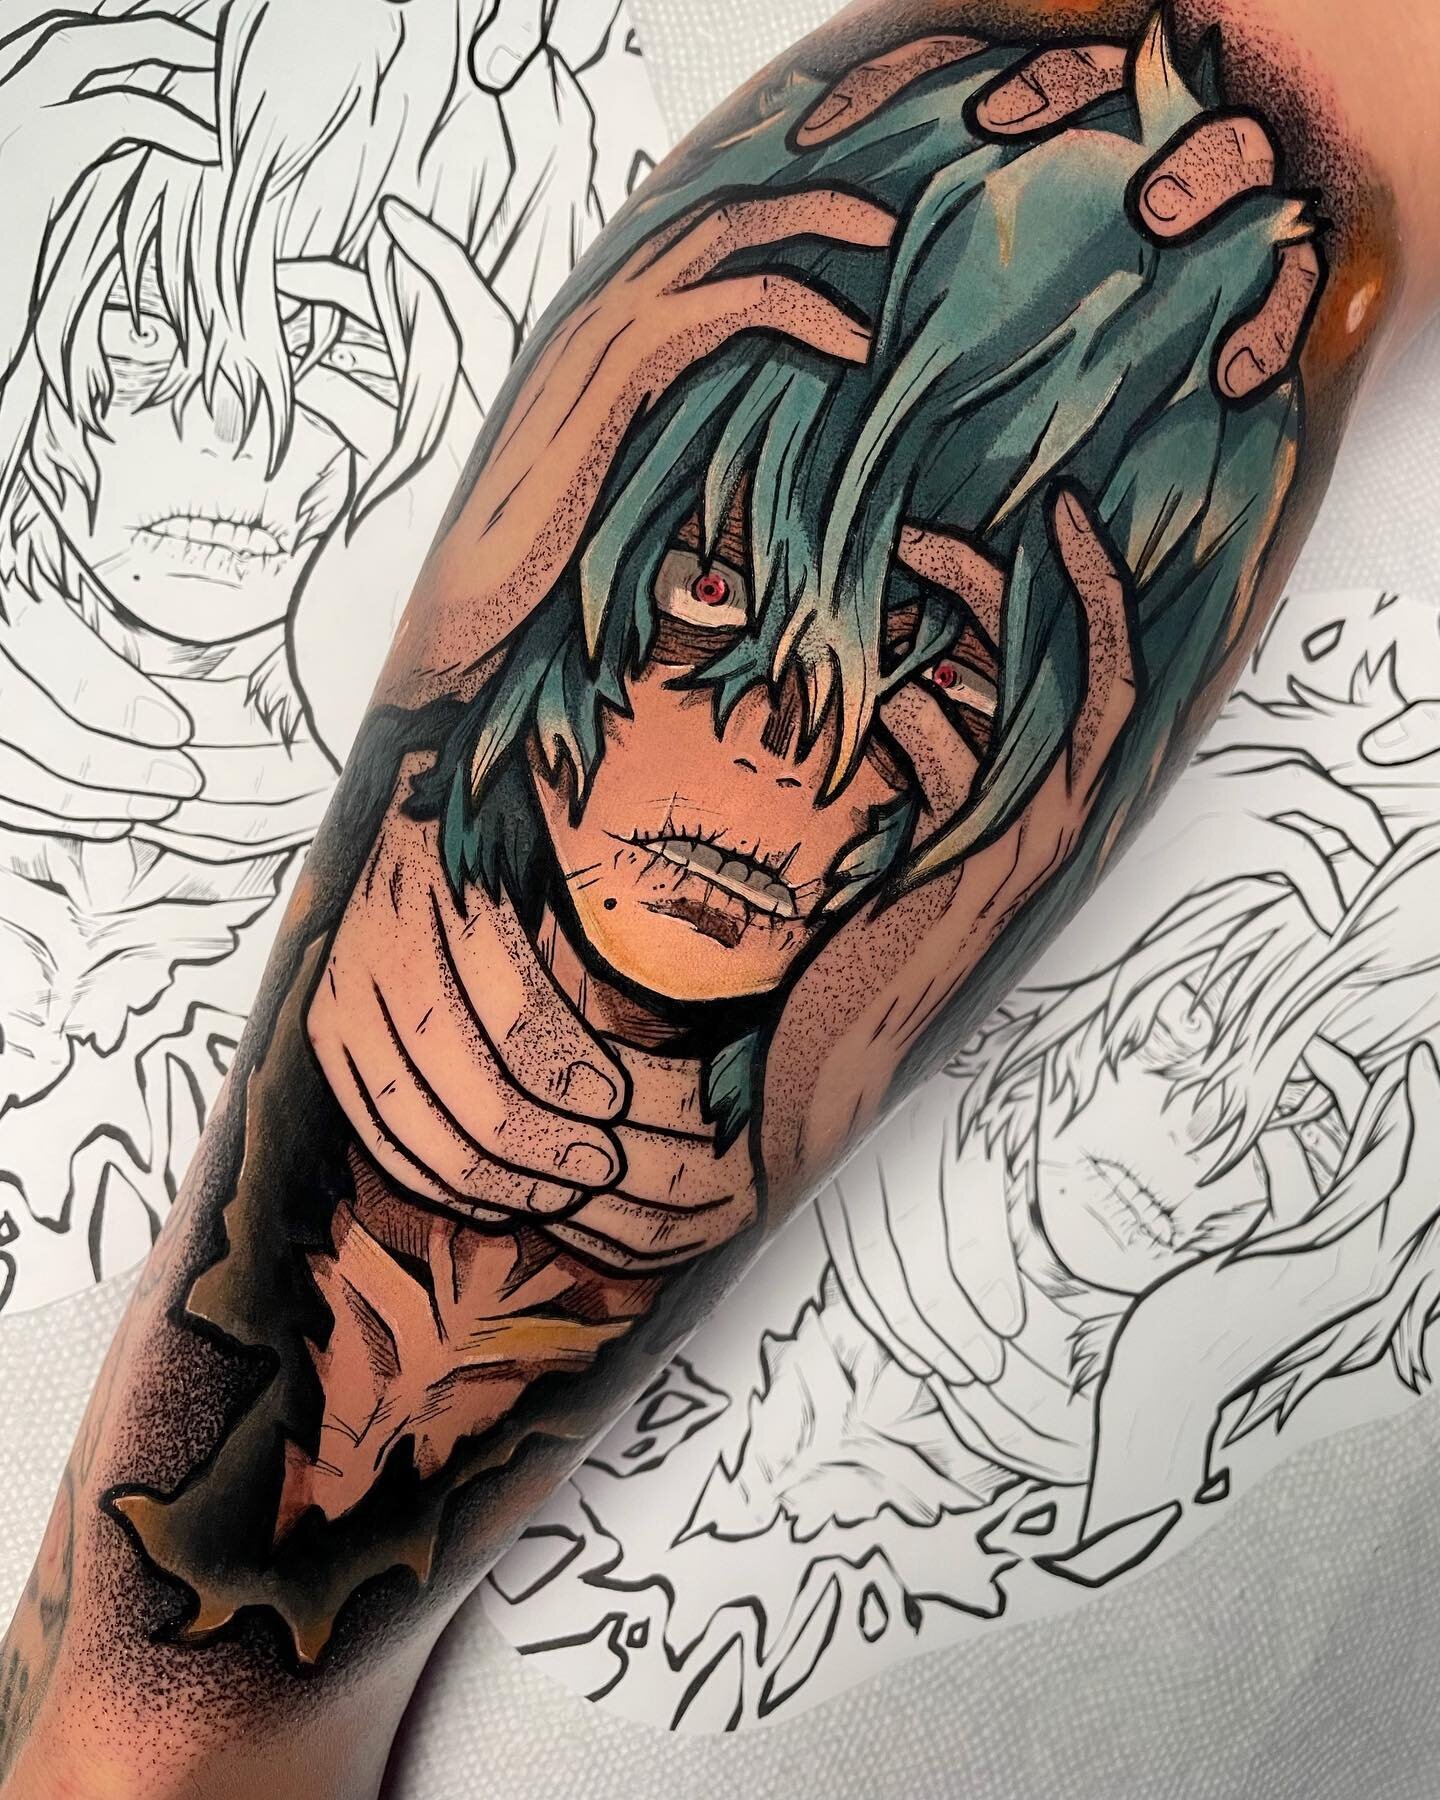 Collab of Shigaraki with my boy #tattoo #tattoos #collab #collaboration #anime #manga #animetattoo #shigarakitomura